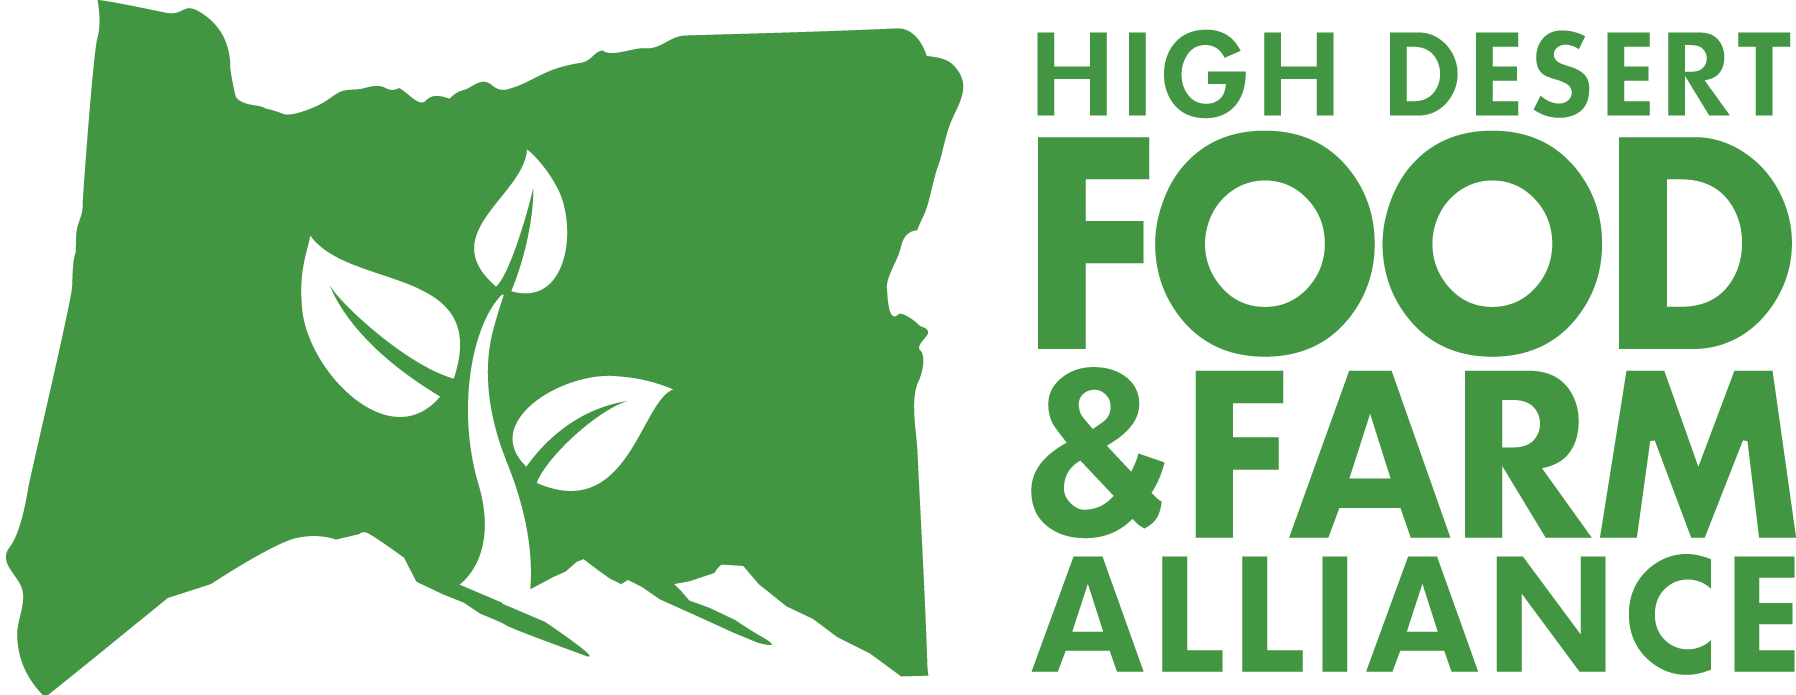 High Desert Food & Farm Alliance